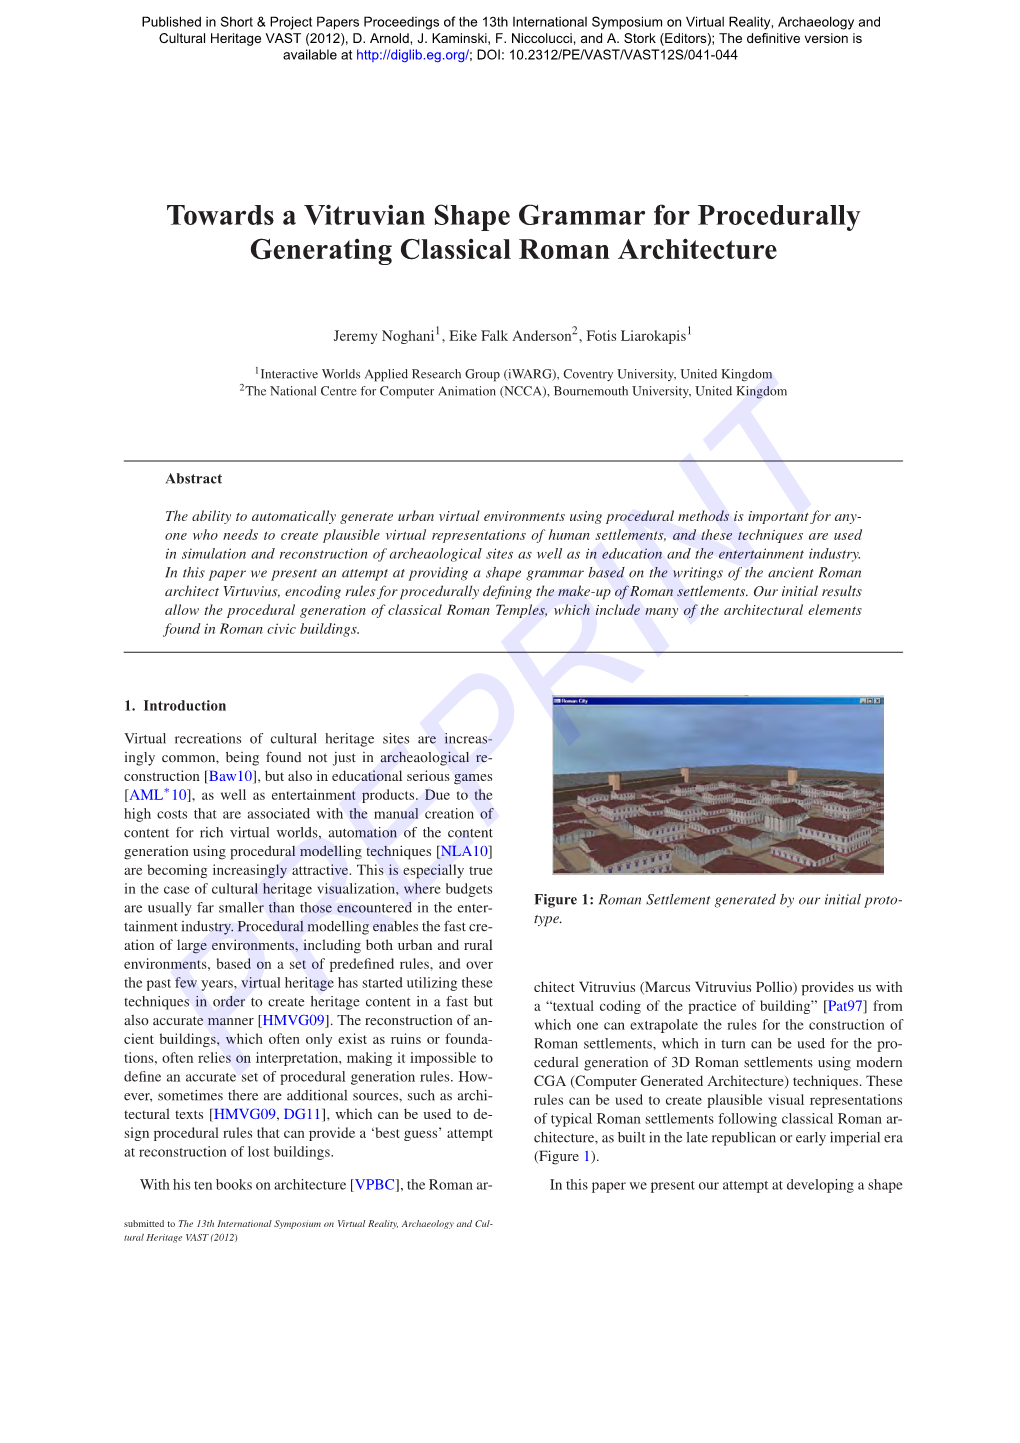 Towards a Vitruvian Shape Grammar for Procedurally Generating Classical Roman Architecture